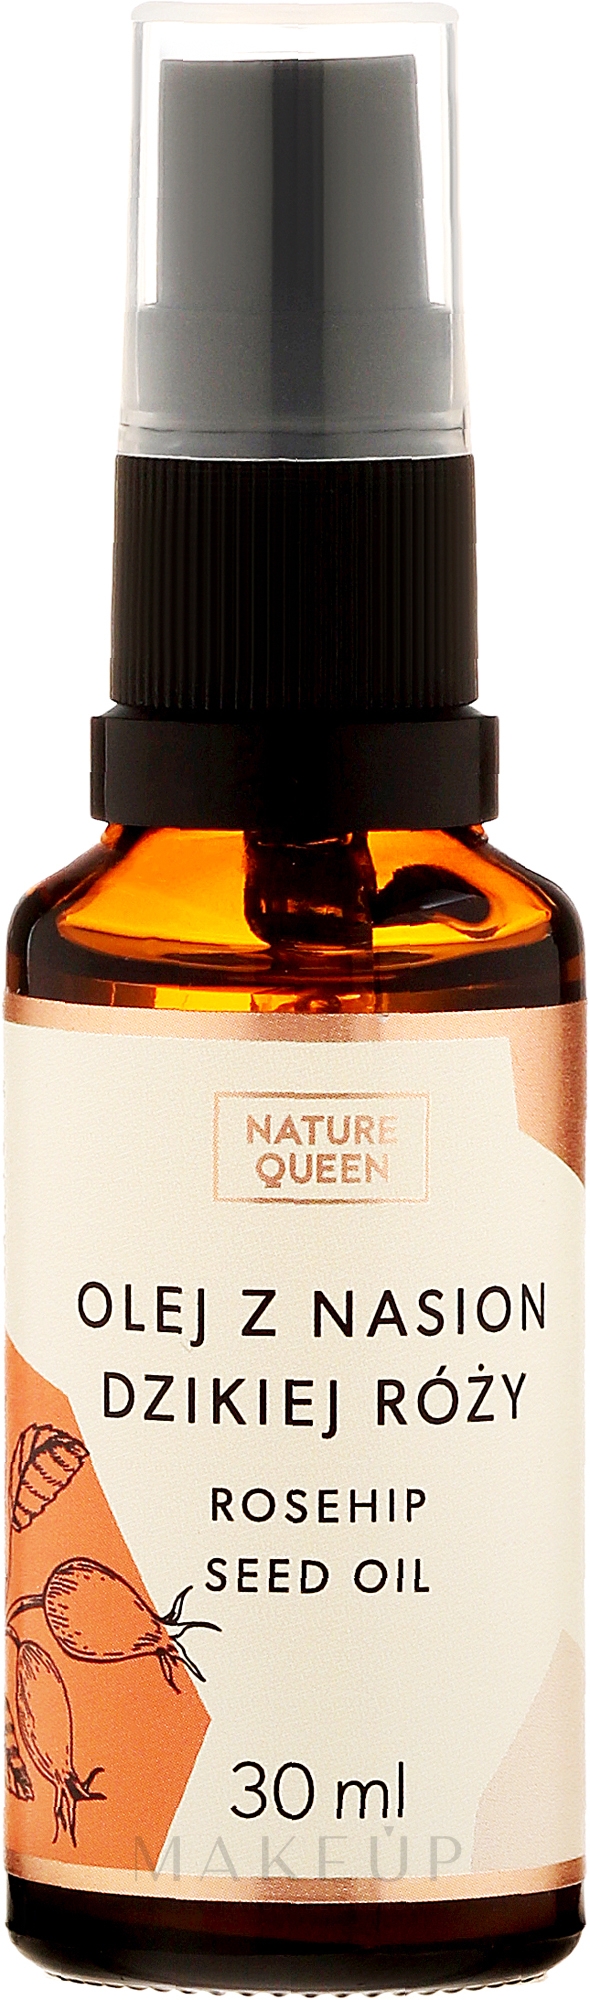 Kosmetisches Hagebuttenöl - Nature Queen Rosehip Seed Oil — Foto 30 ml